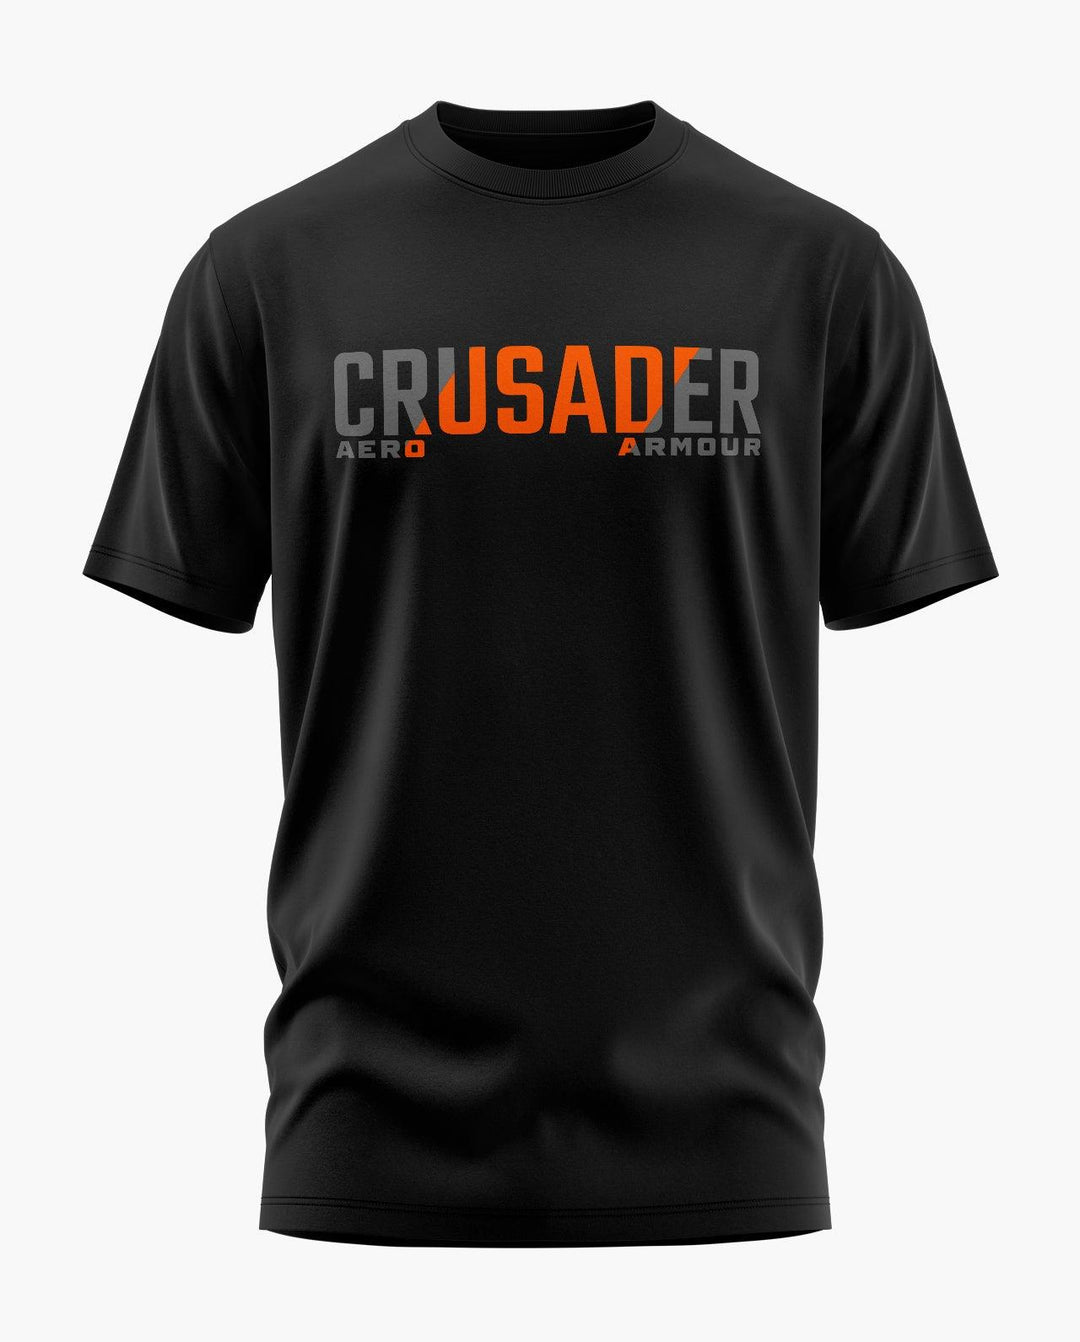 Crusader T-Shirt - Aero Armour